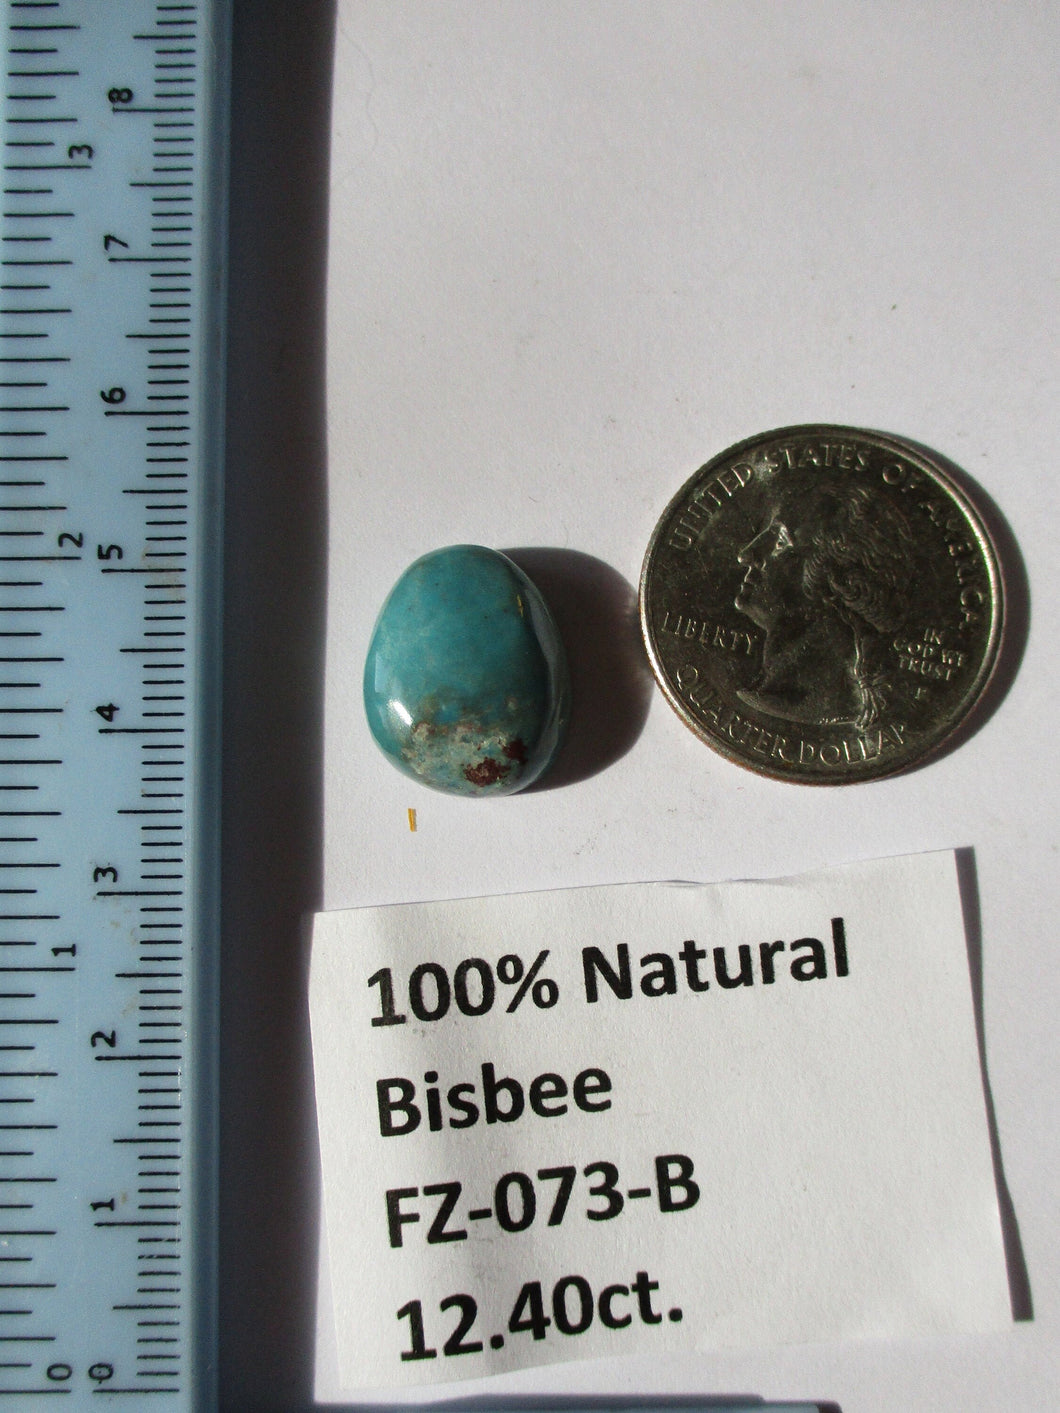 12.4 ct. (16x13x6 mm) 100% Natural Bisbee Turquoise, Cabochon Gemstones, # FZ 073